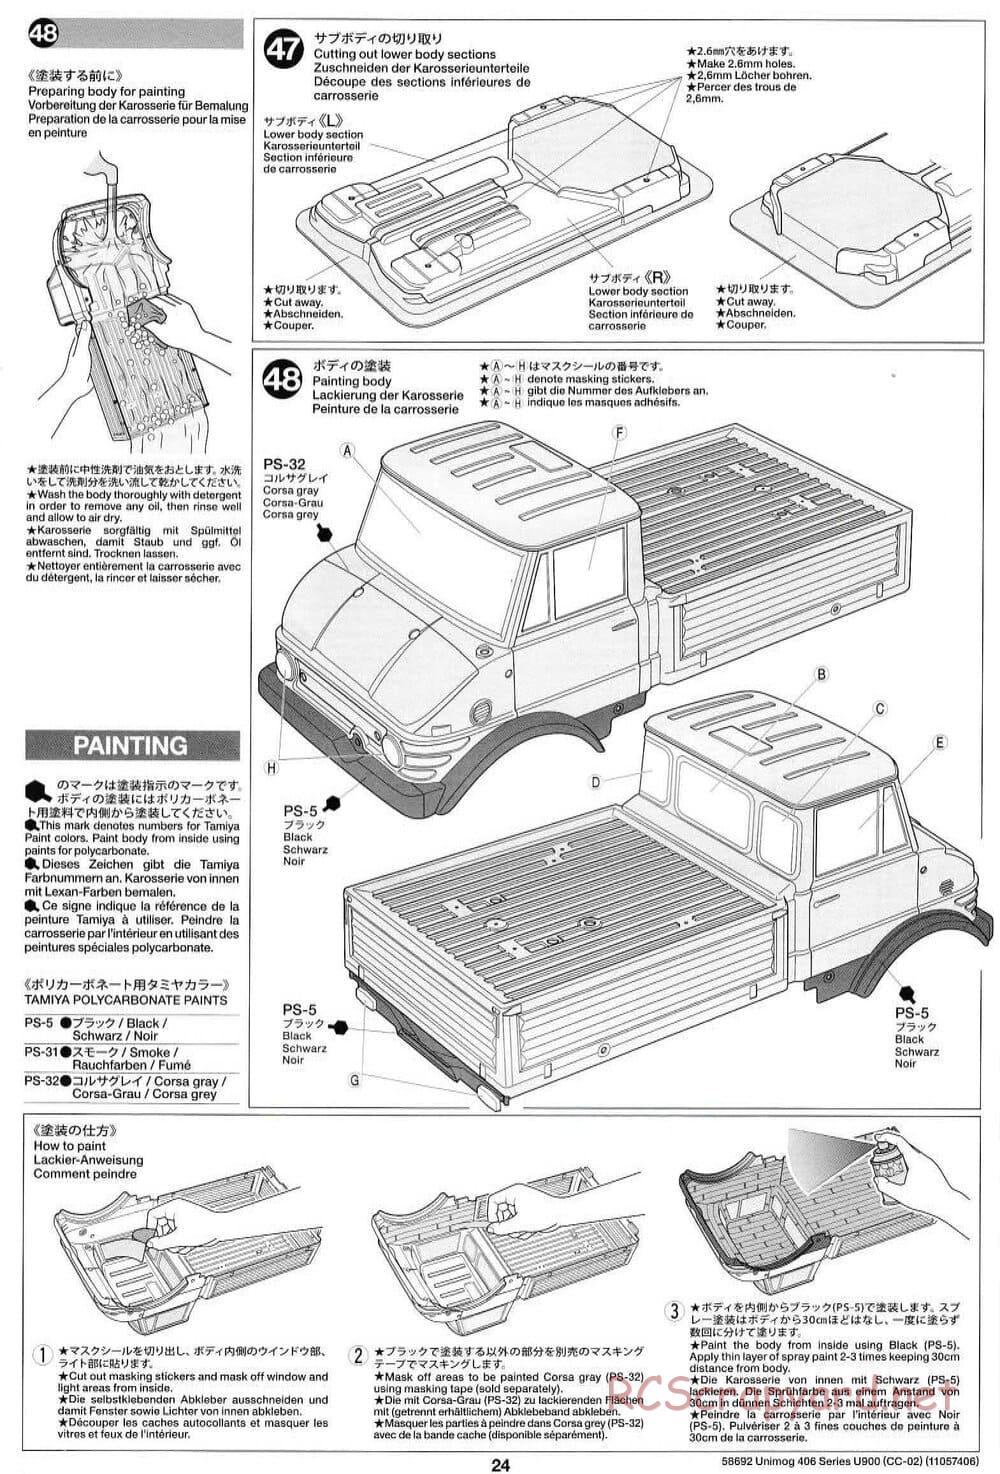 Tamiya - Mercedes-Benz Unimog 406 Series U900 - CC-02 Chassis - Manual - Page 24